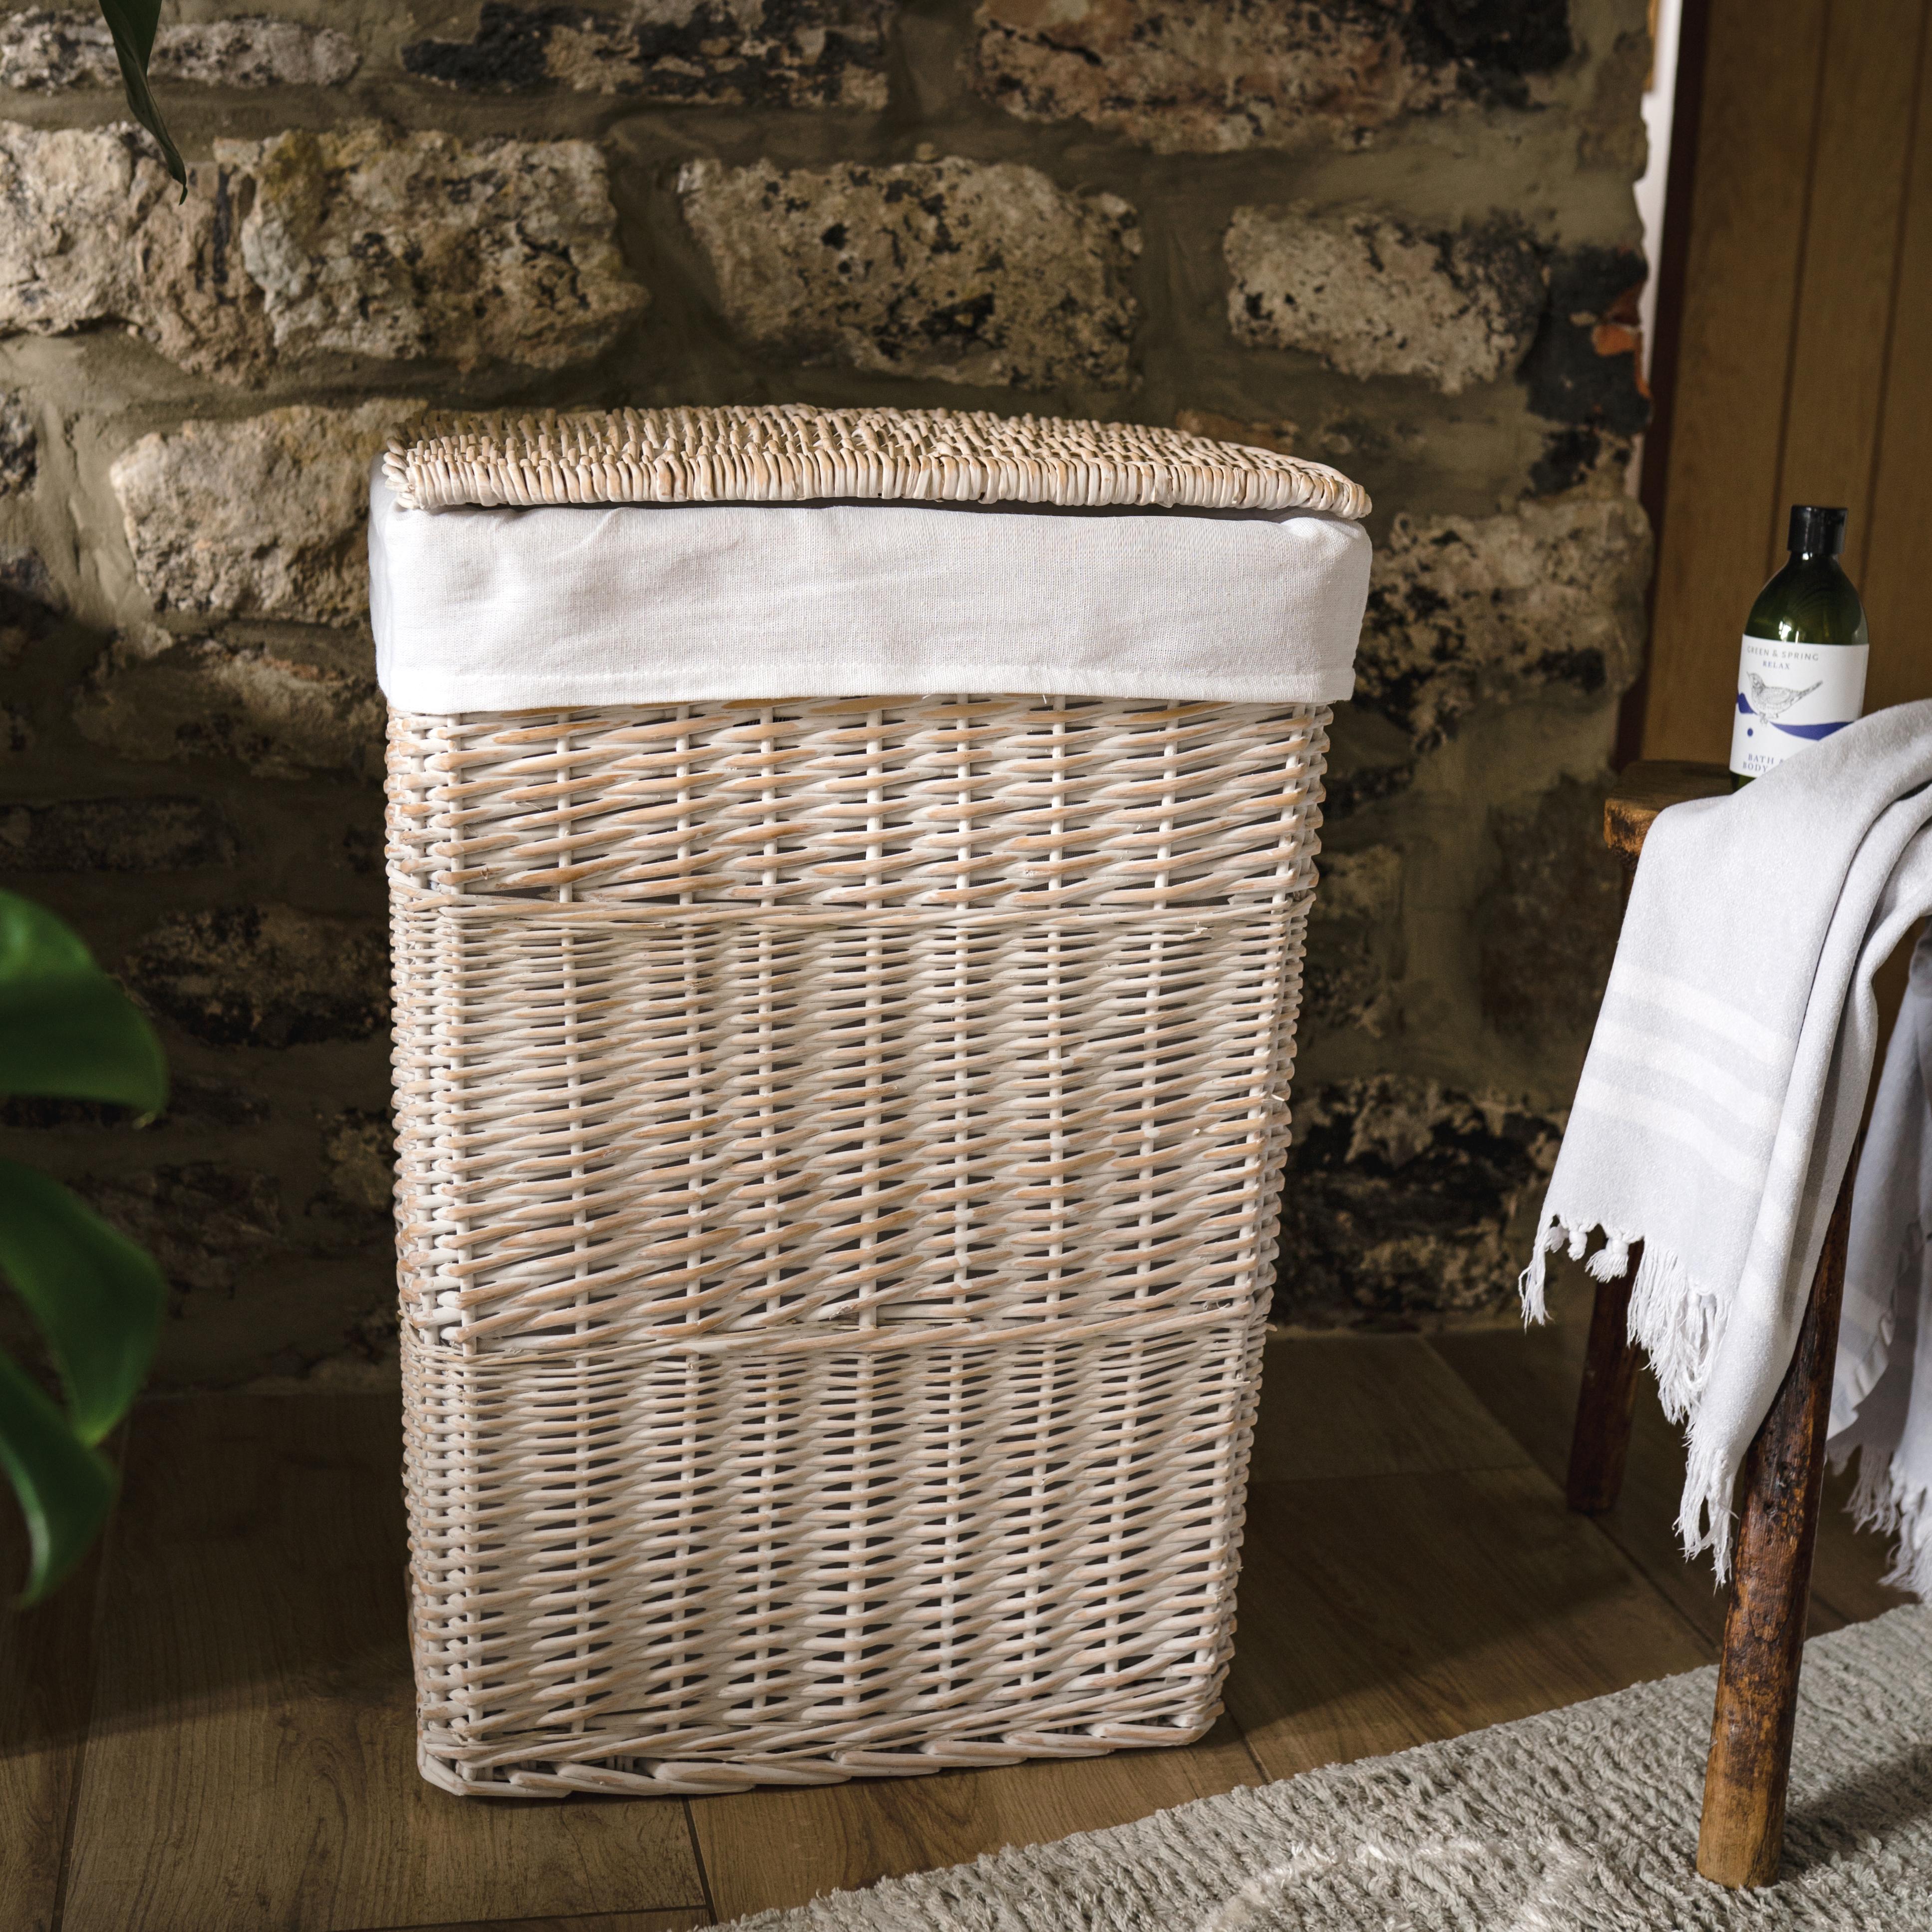 White Wash Wicker Laundry Basket